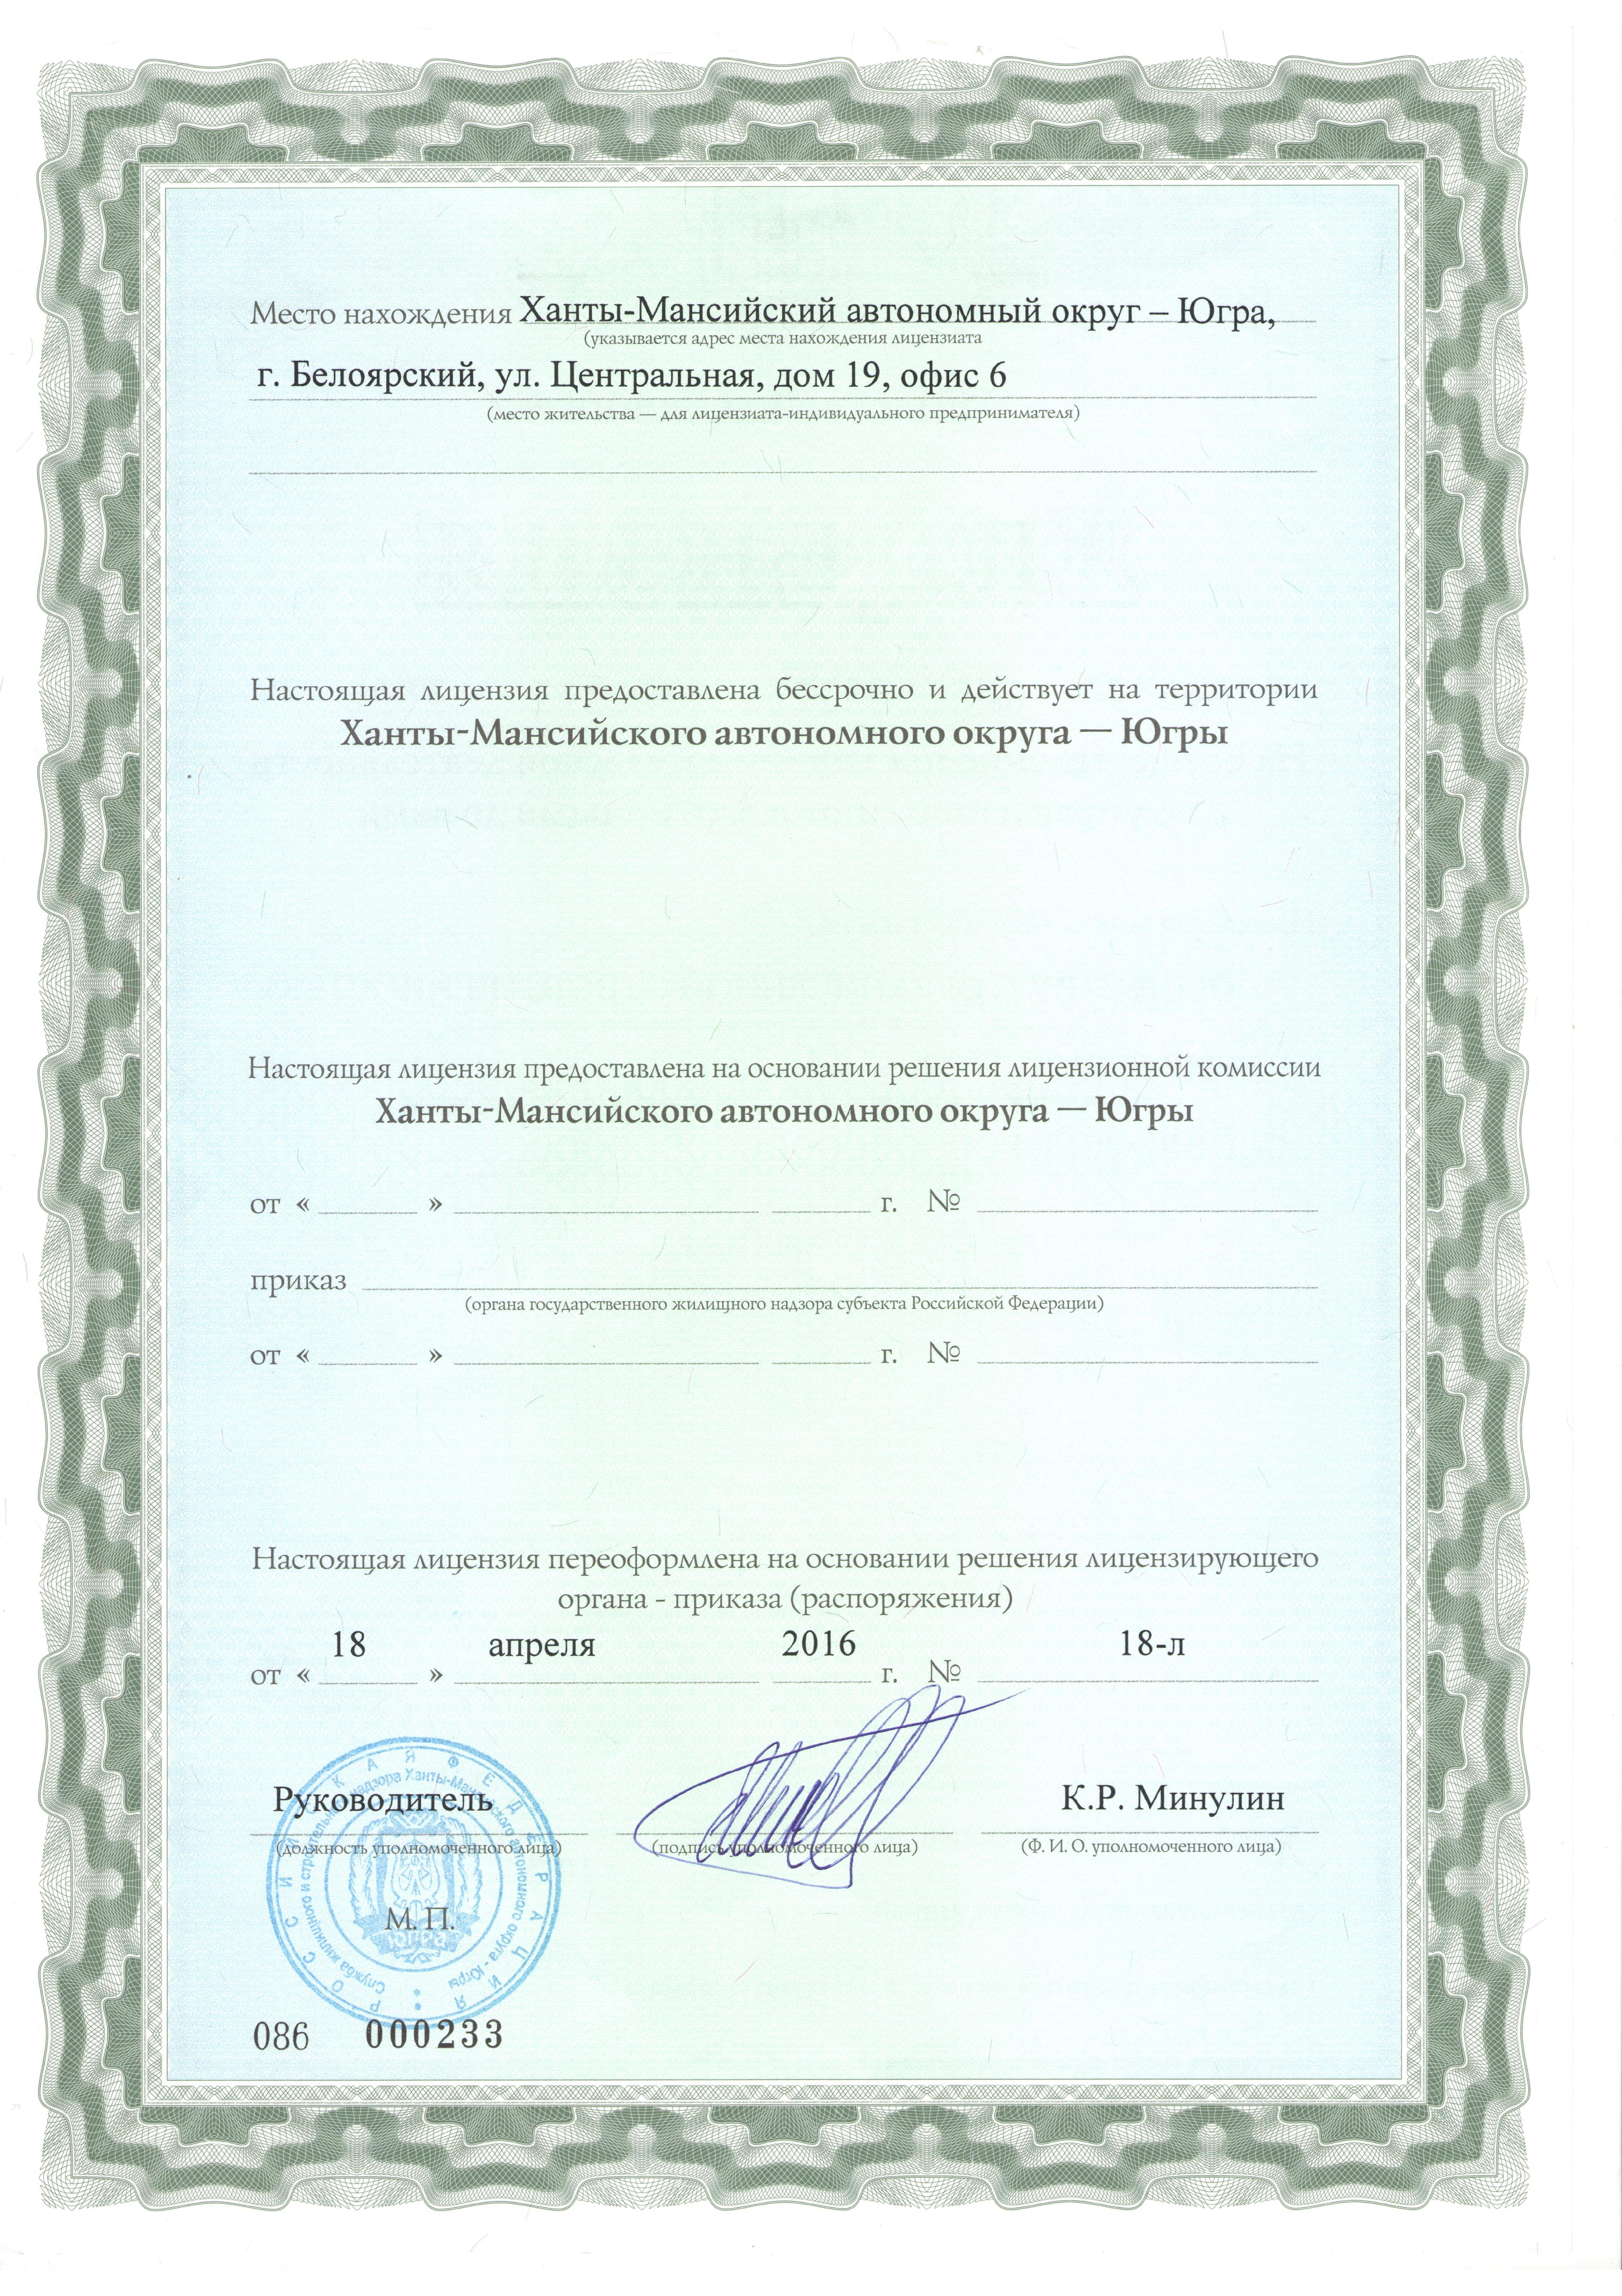 Лицензия на управление МКД №233 от 18.04.2016